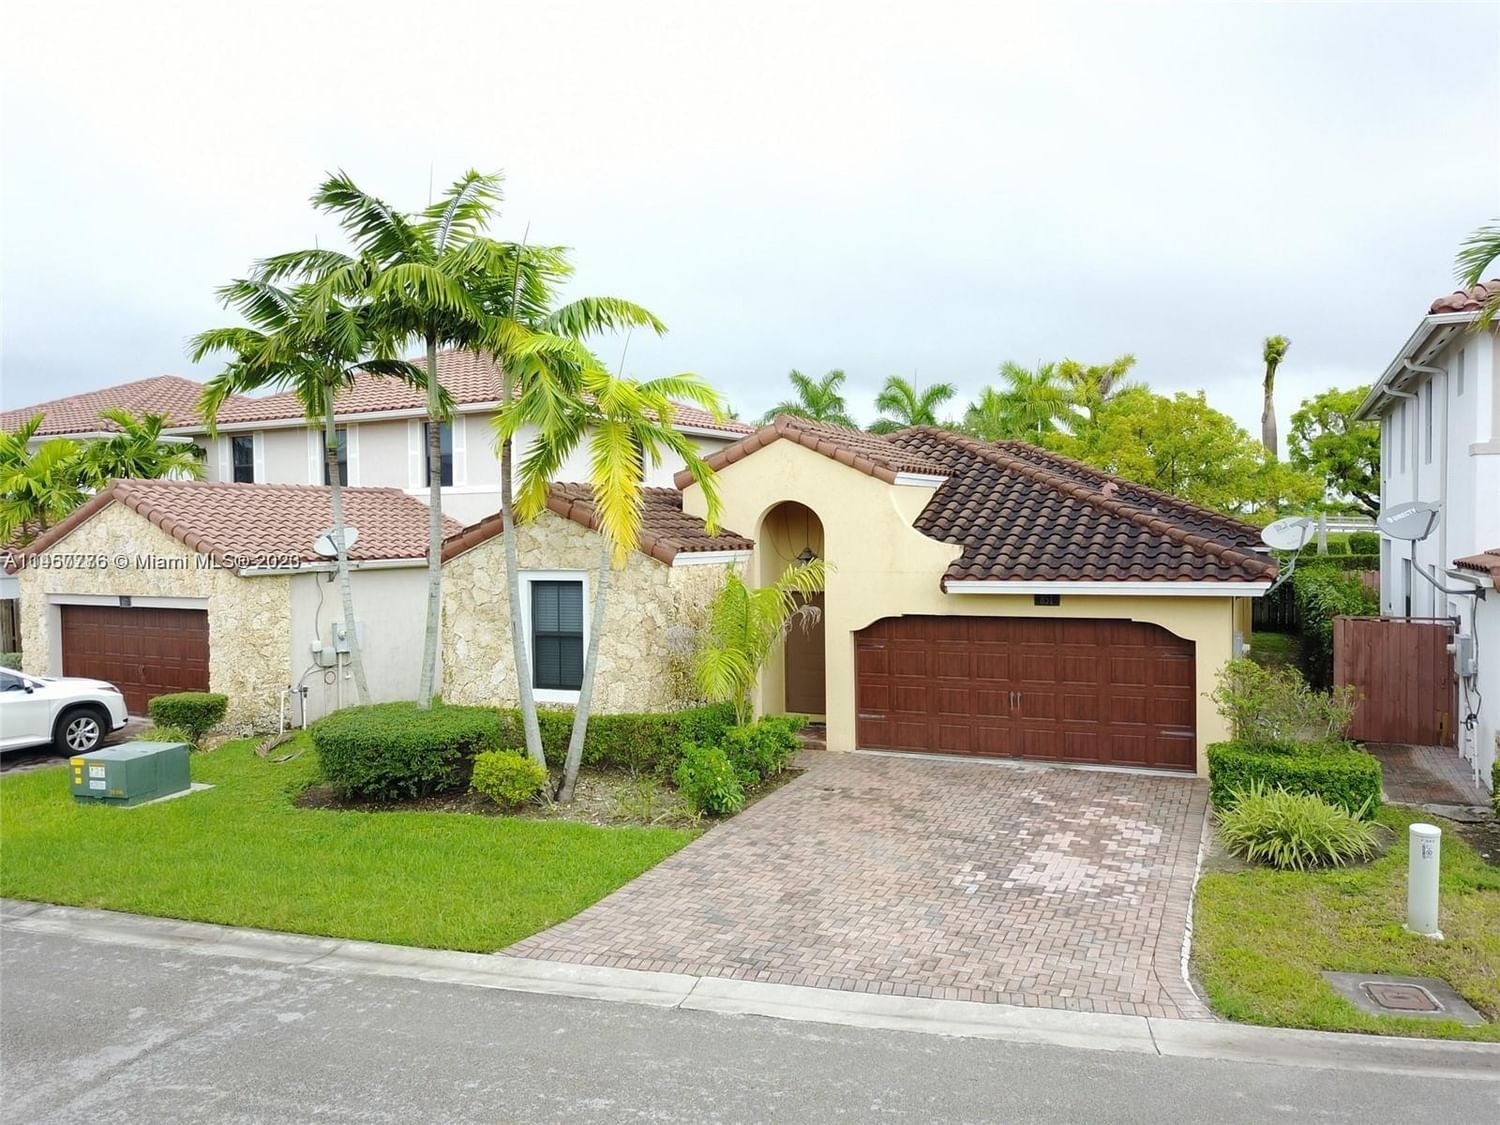 Real estate property located at 851 97th Ct, Miami-Dade County, Miami, FL